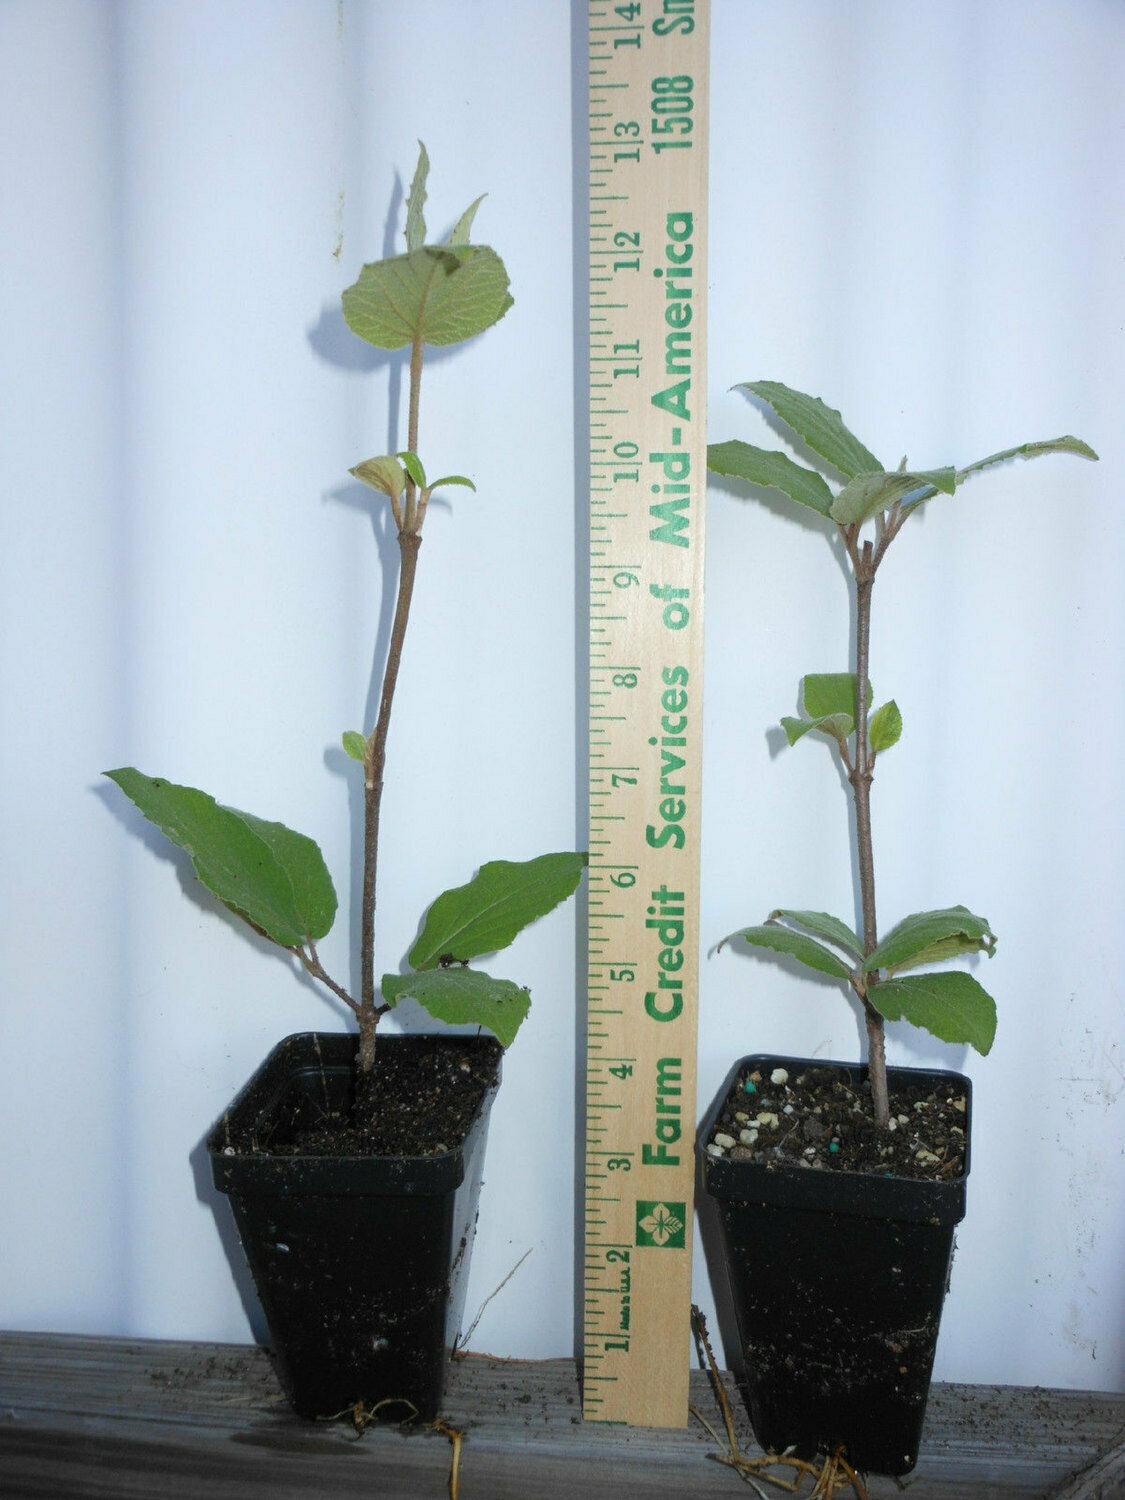 2 Juddi Viburnum Shrubs - Live Potted Plants - 6-12" Tall Seedlings - 3" Pots - The Nursery Center